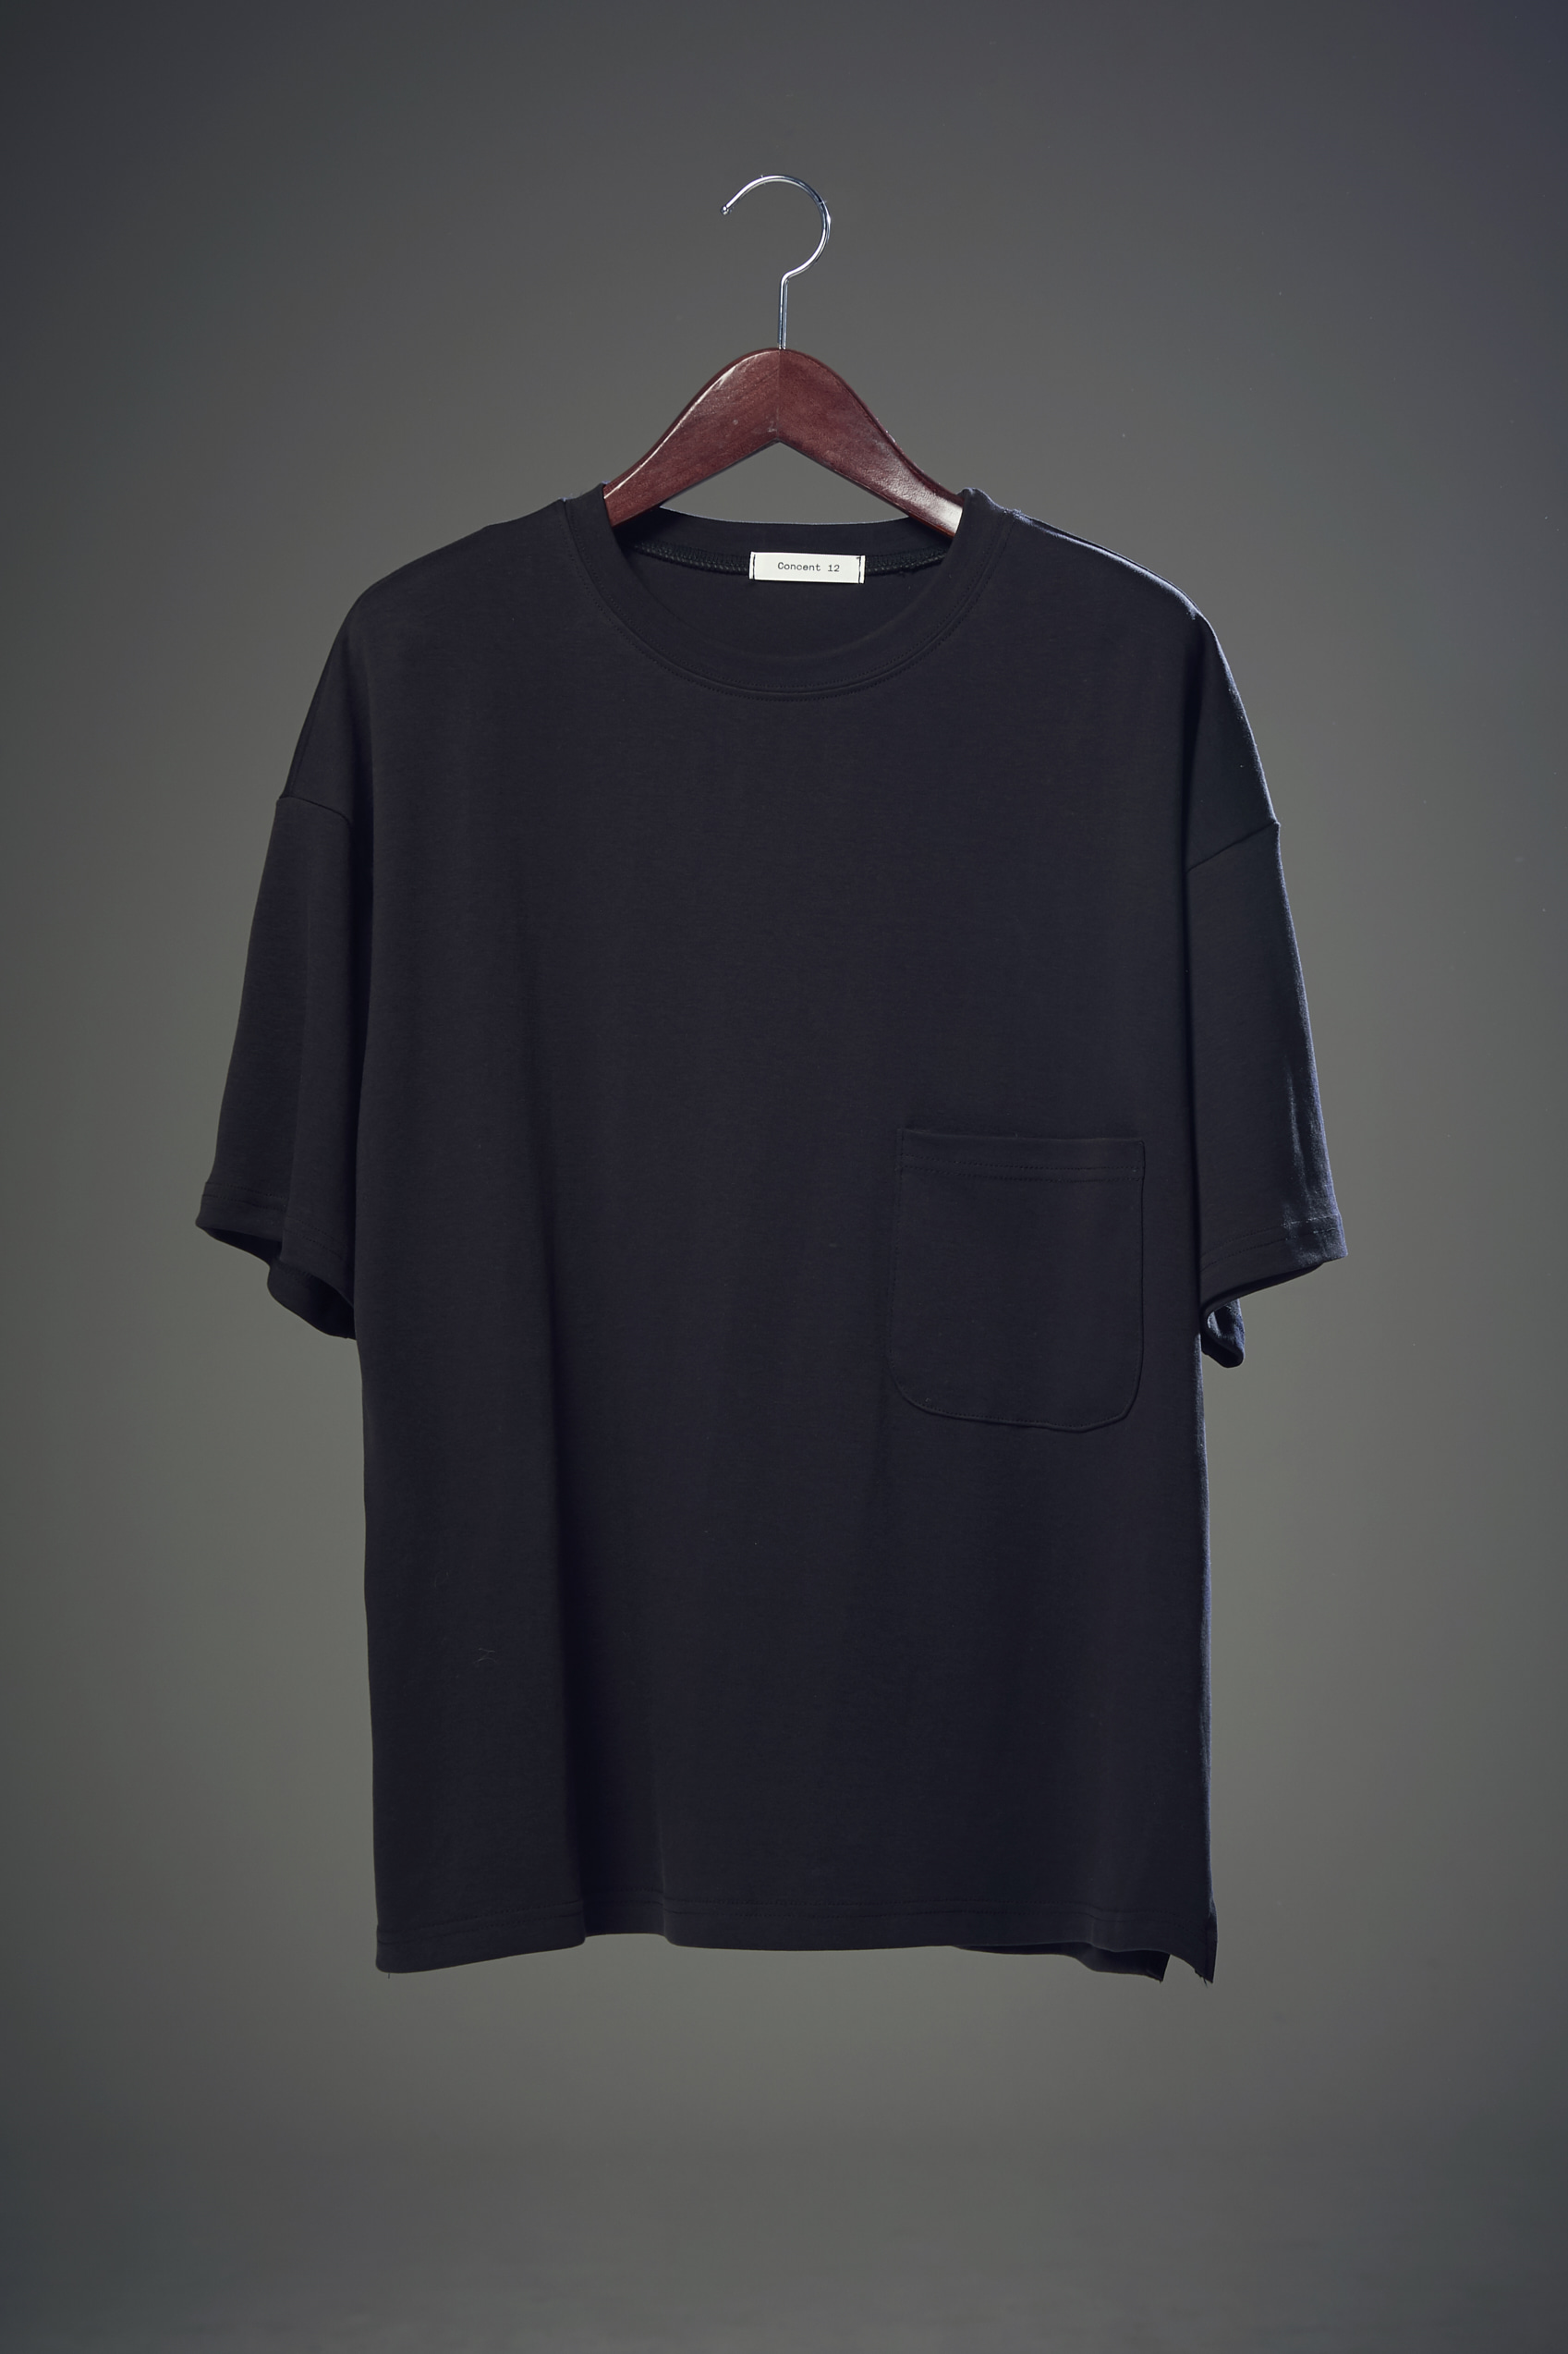 Overfit Pocket Half T shirt Charcoal